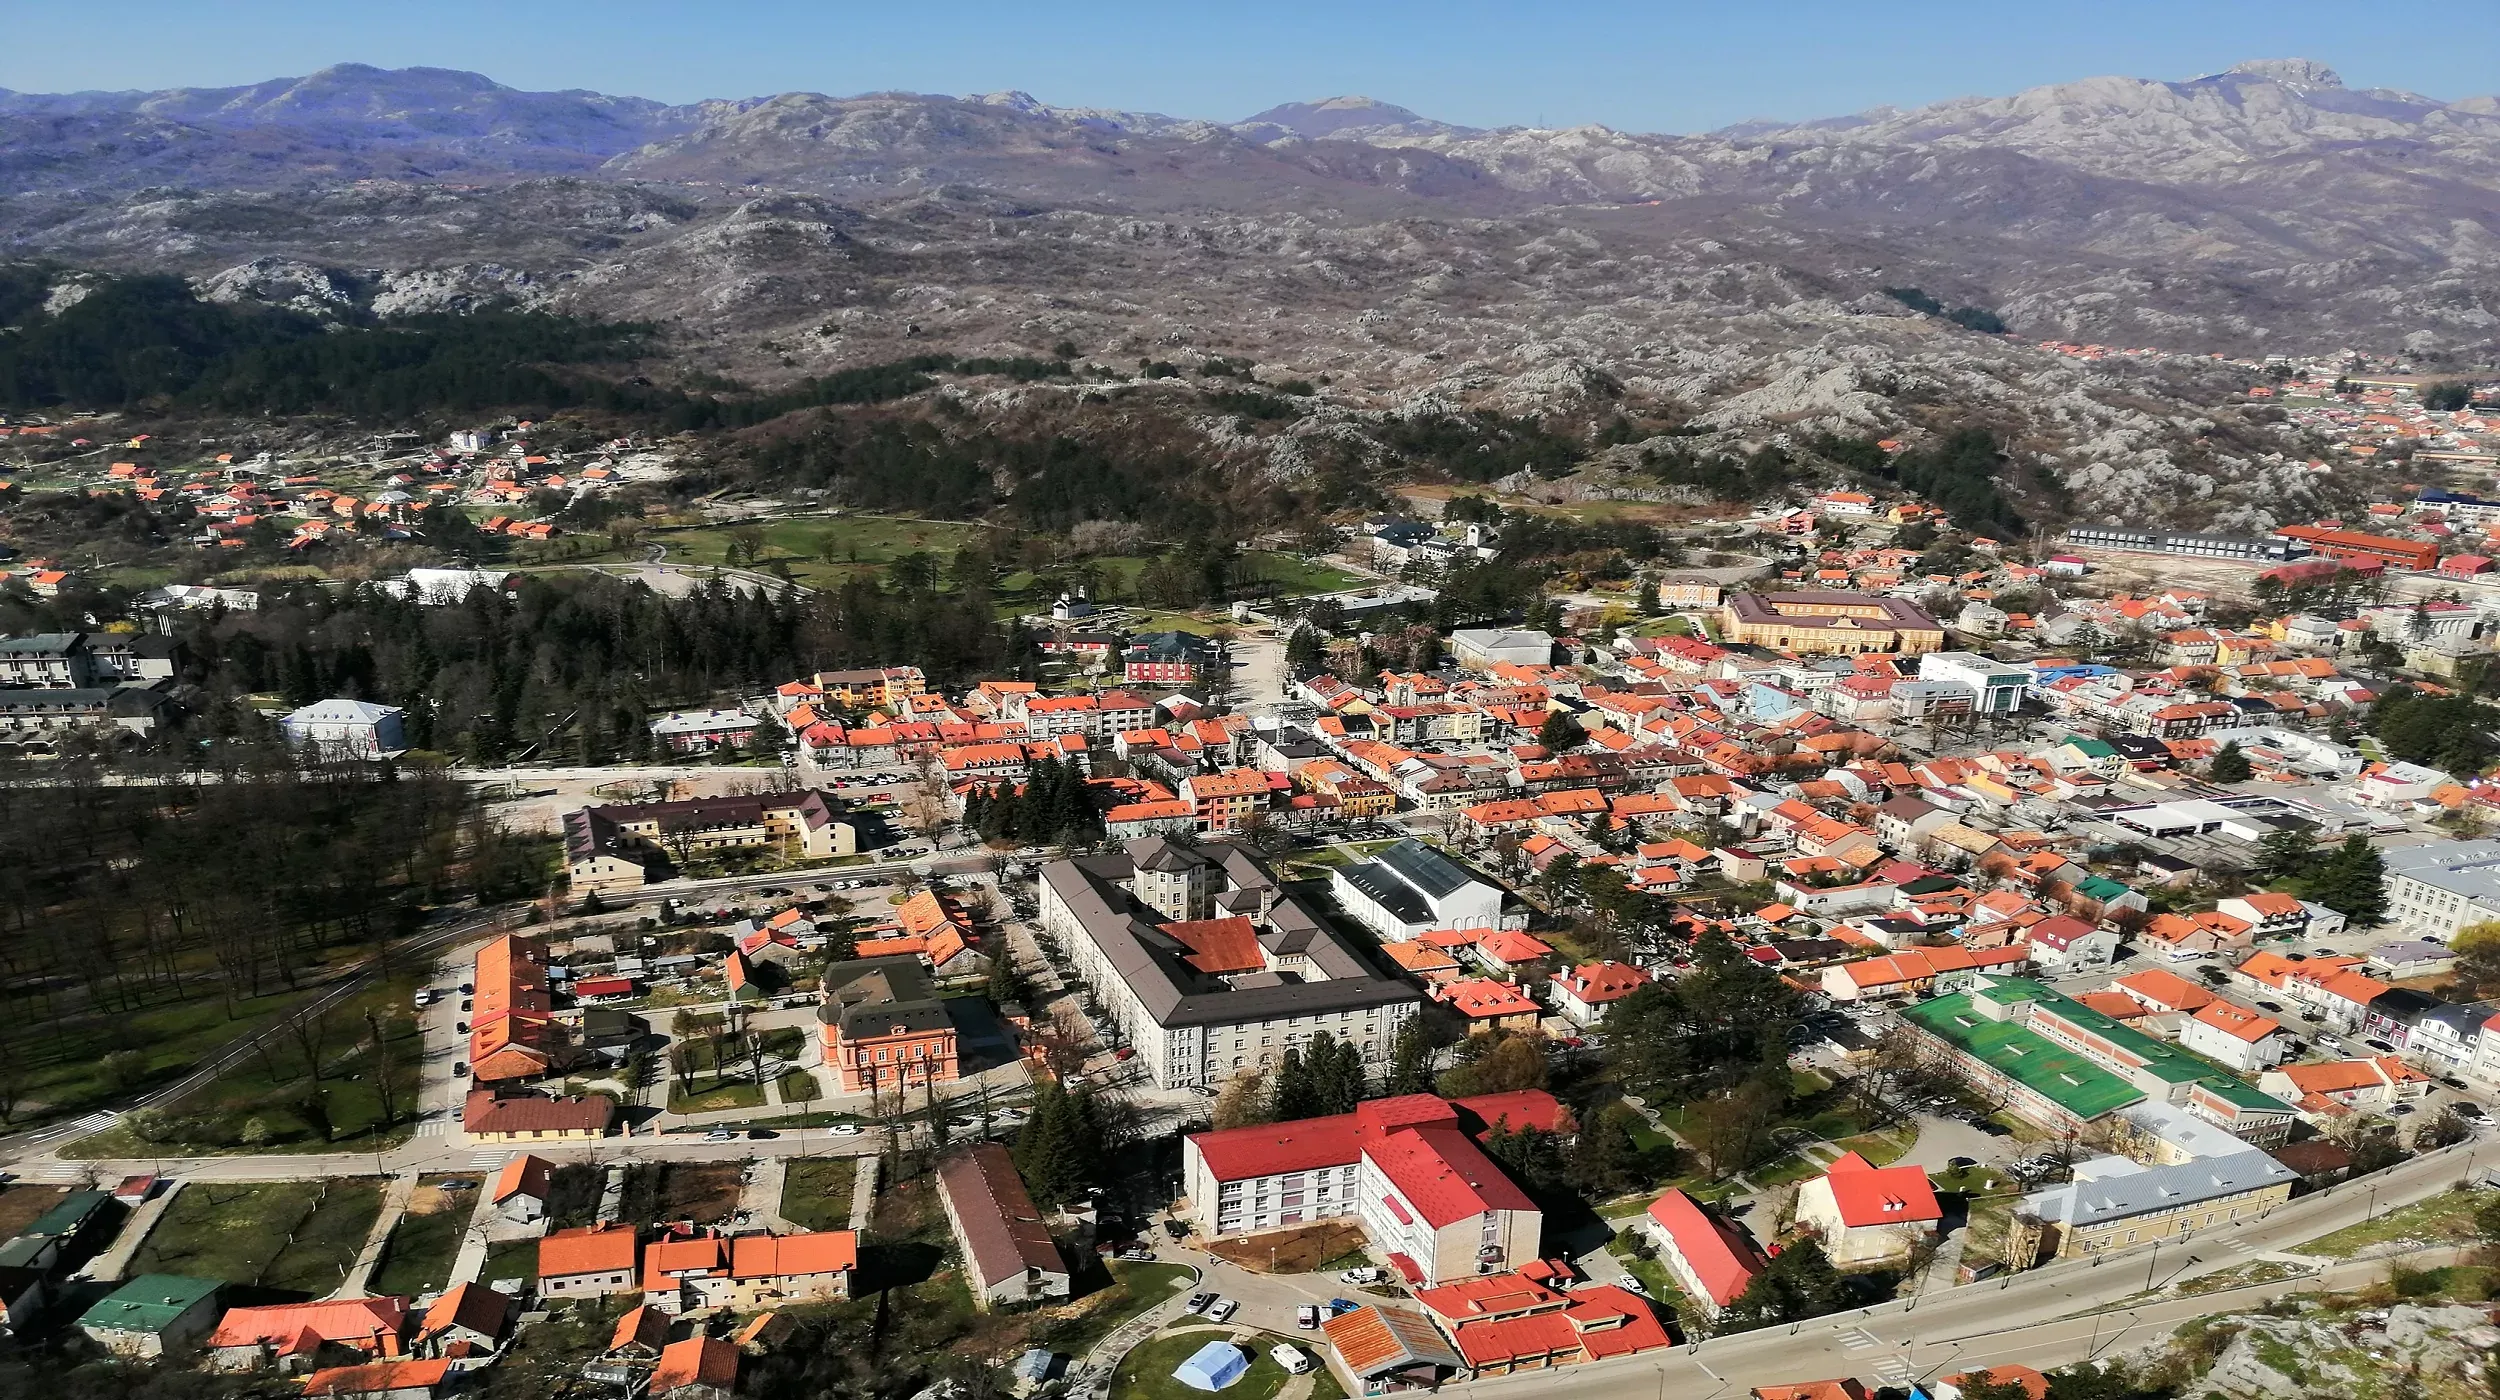 The old royal capital of Cetinje